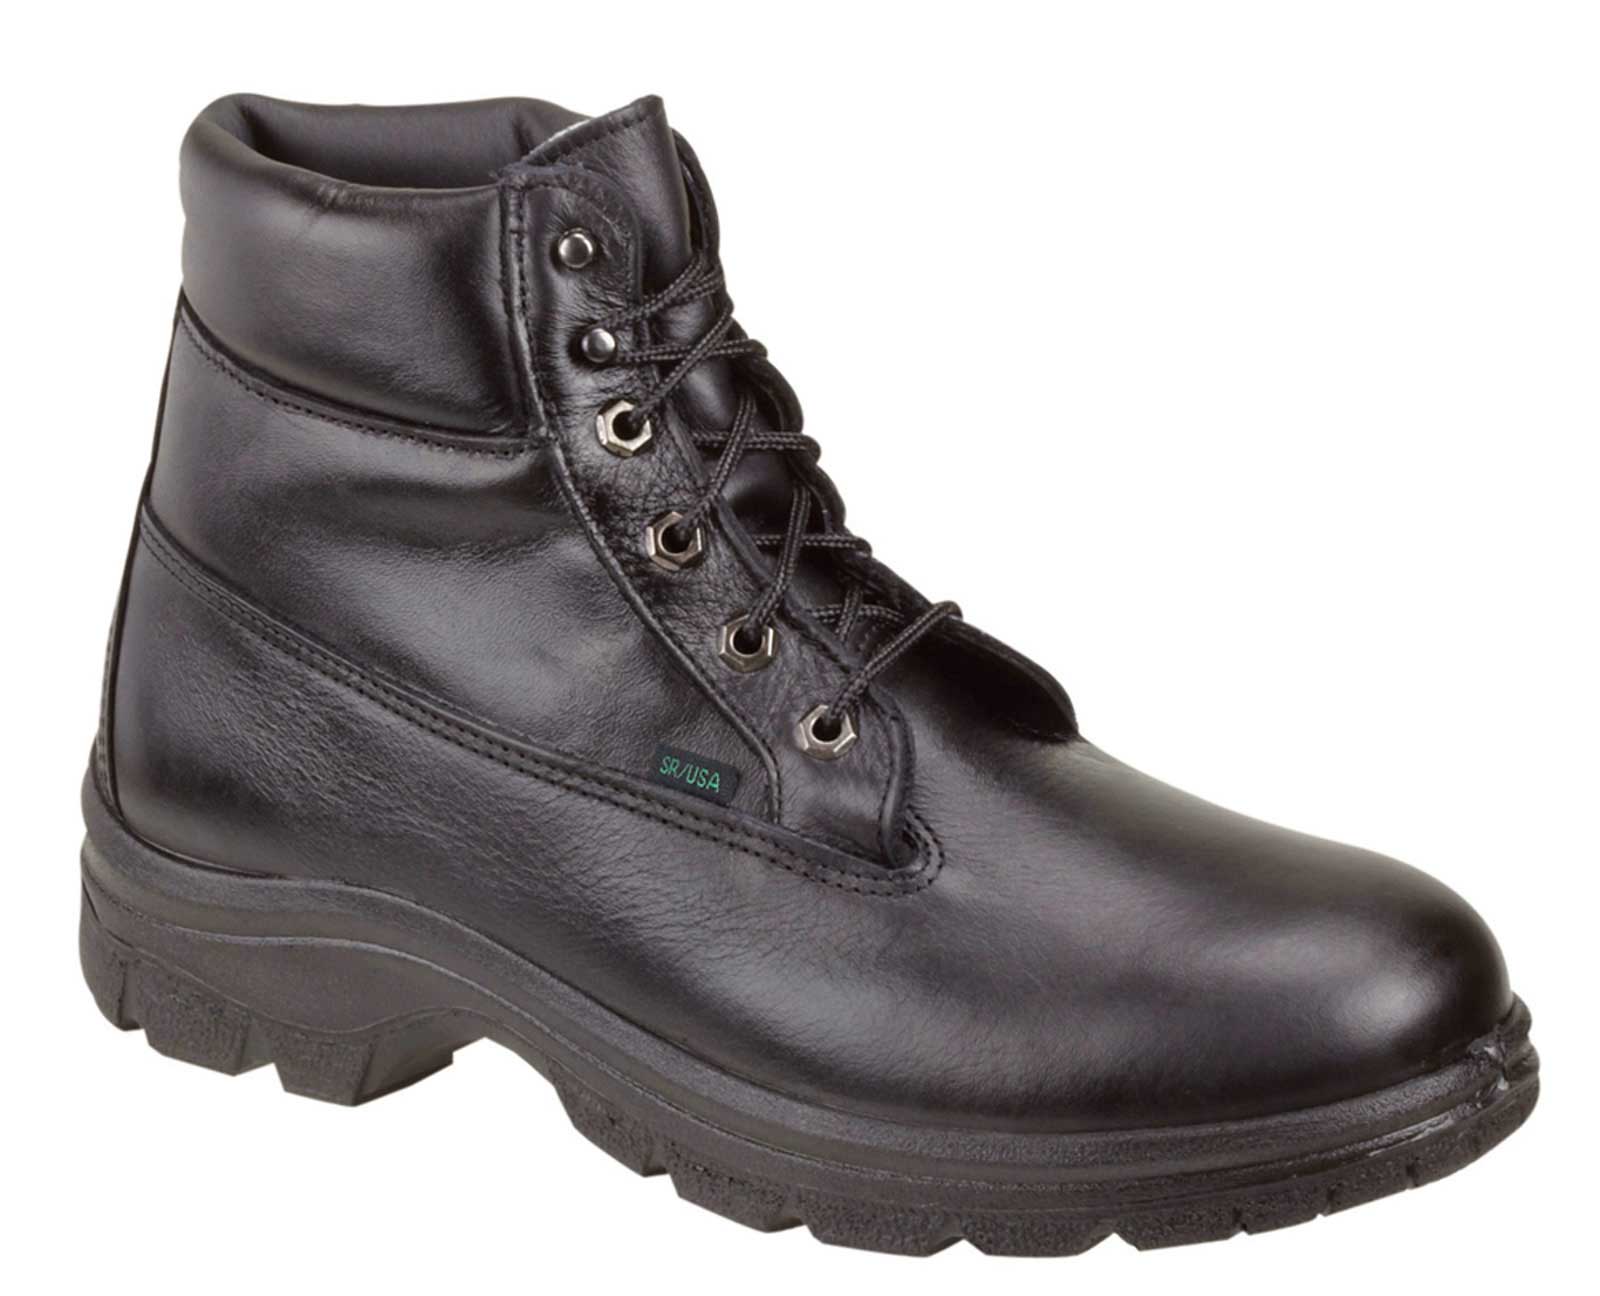 thorogood insulated waterproof work boots